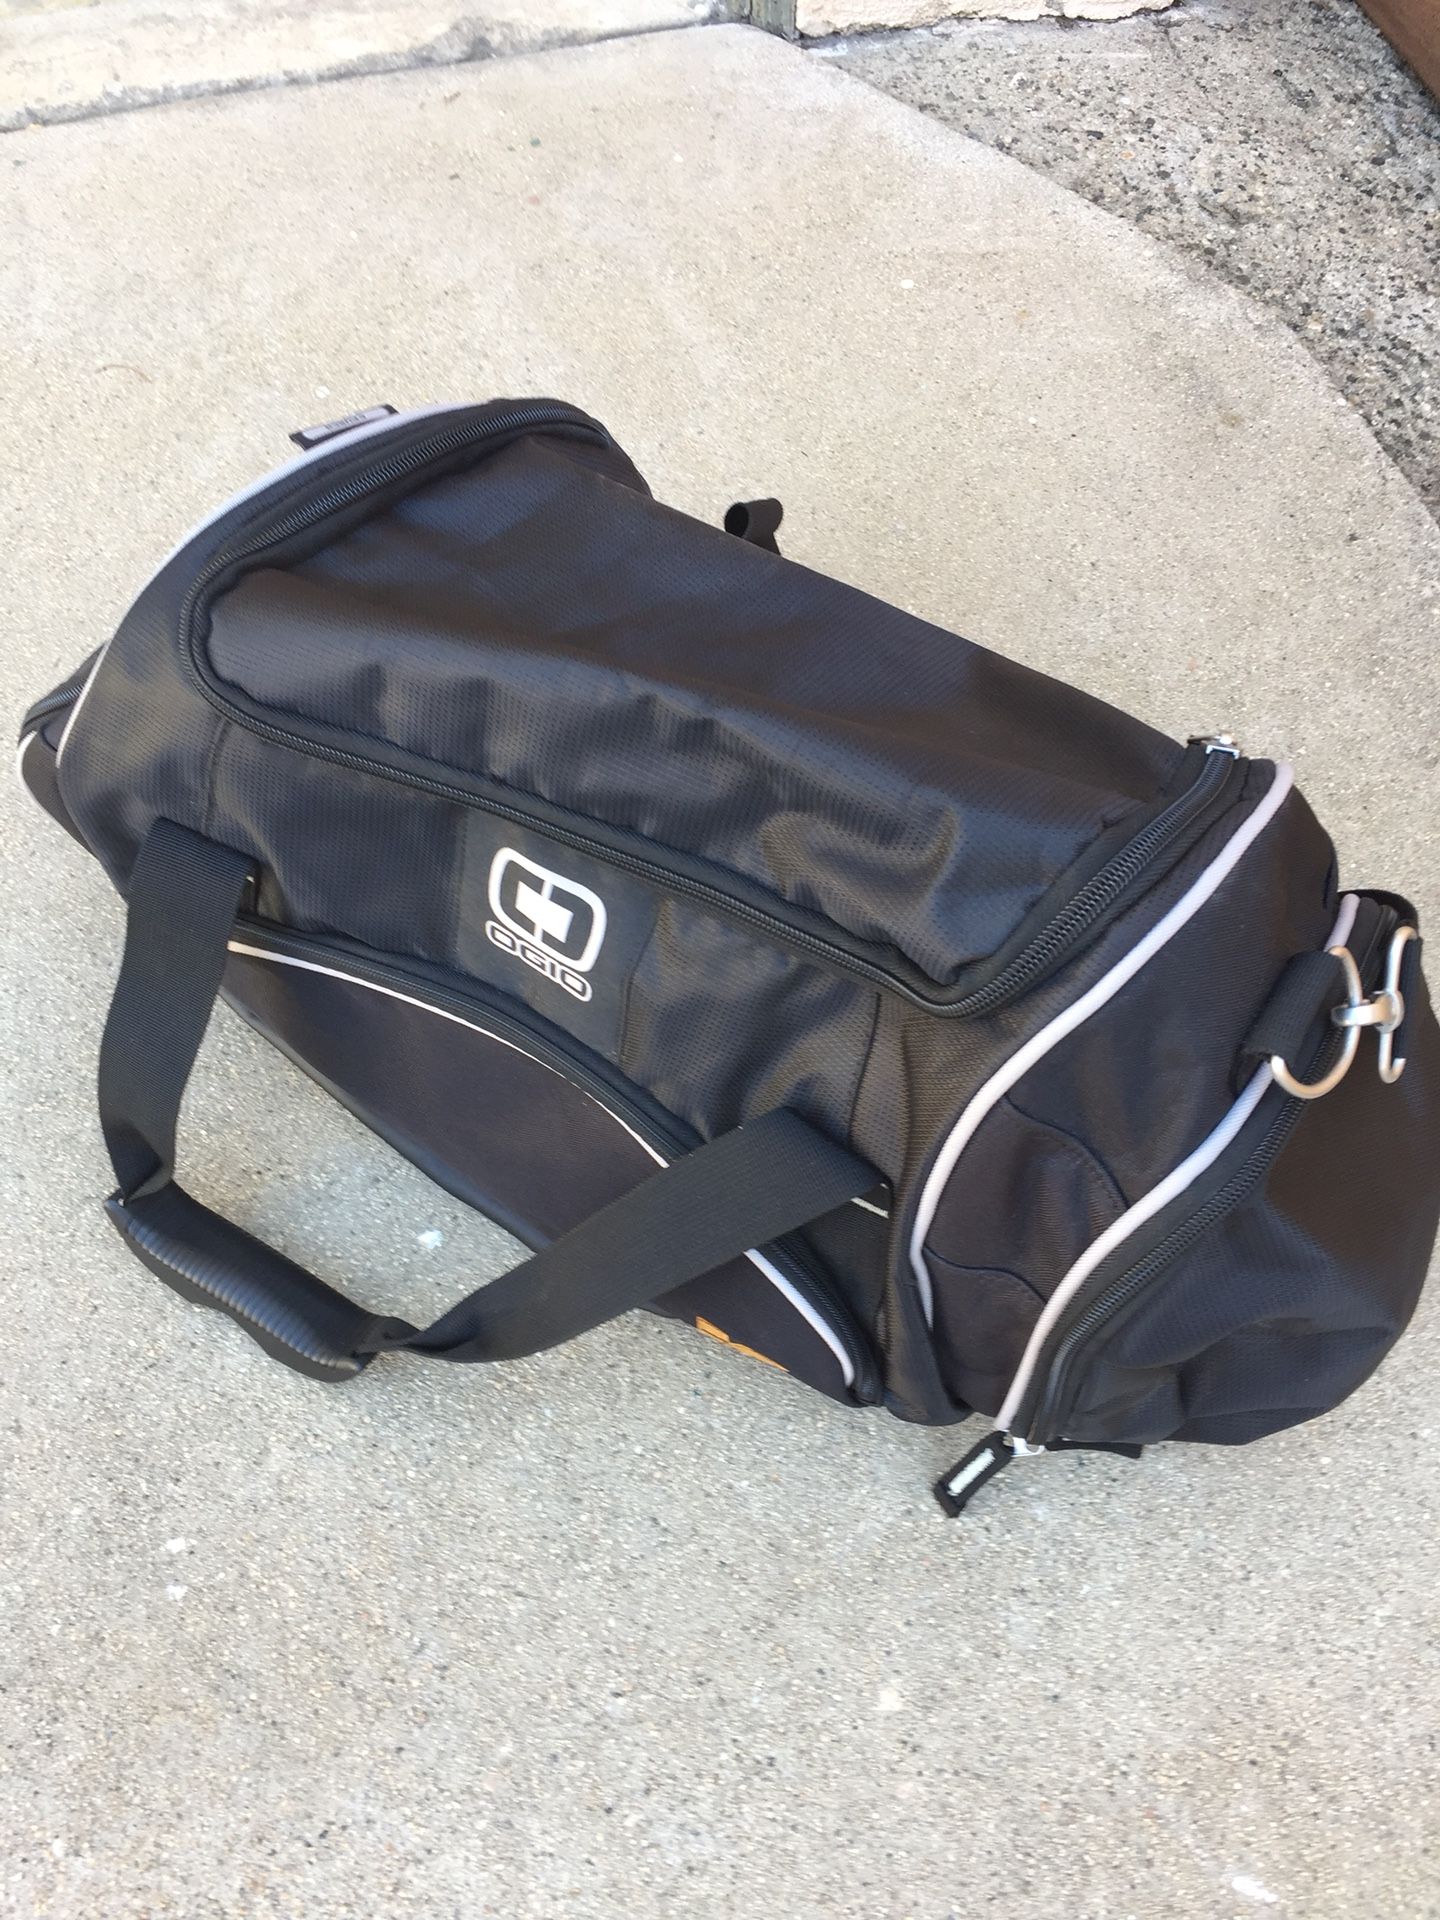 Black Duffle Bag - Medium size in Excellent Condition